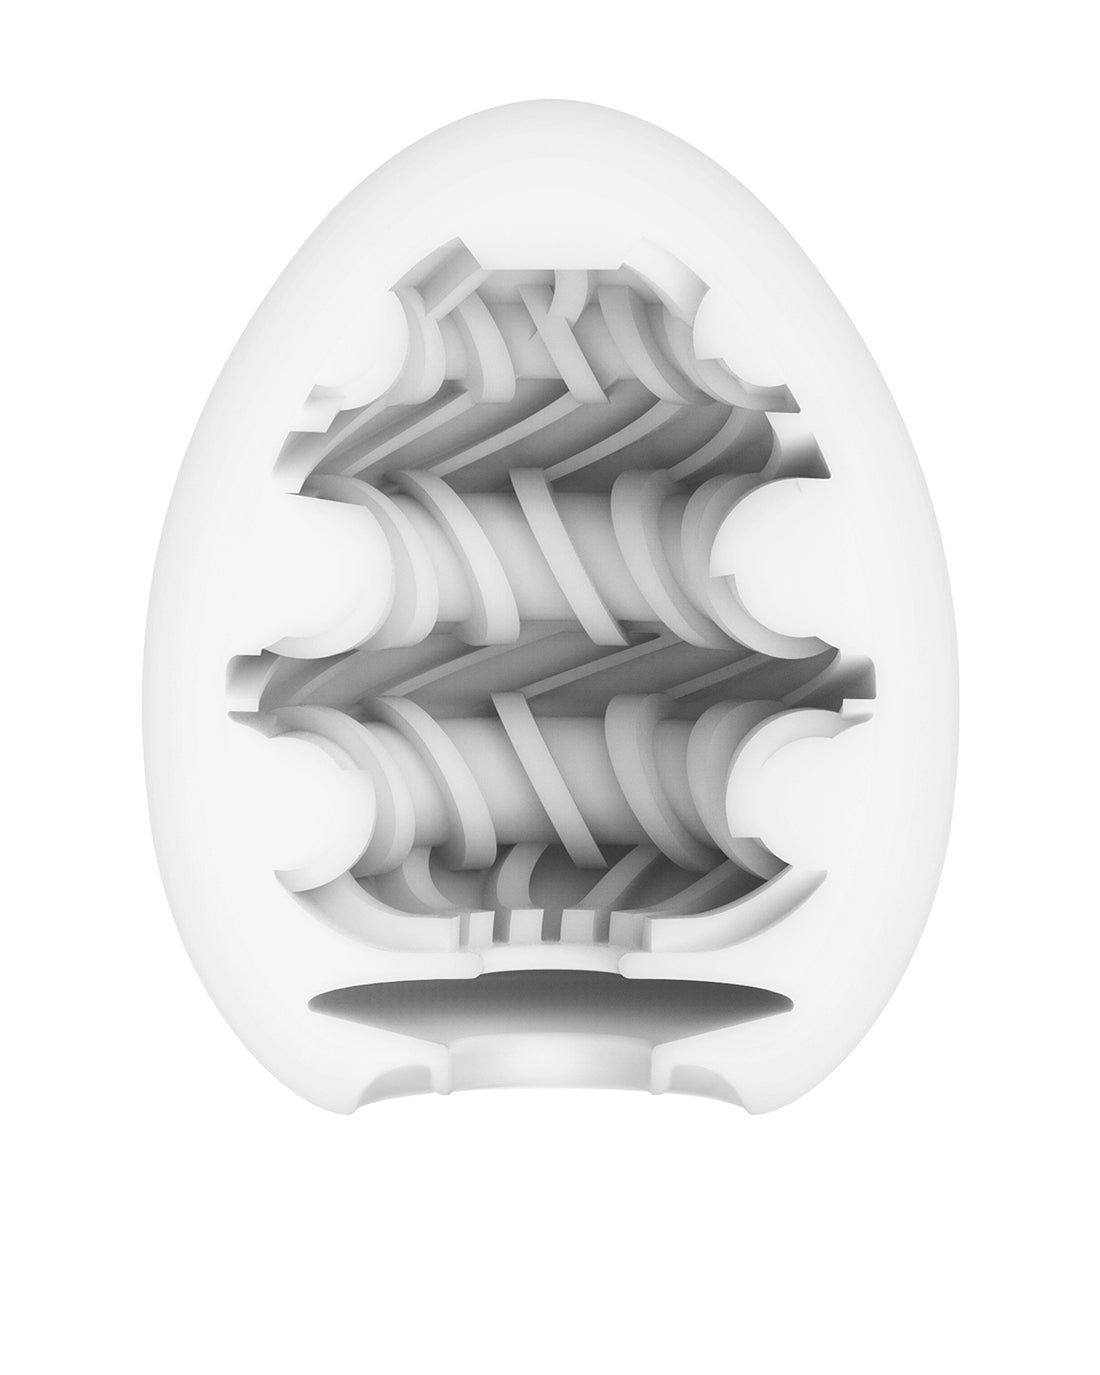 Tenga Egg Ring japoński masturbator w kształcie jajka